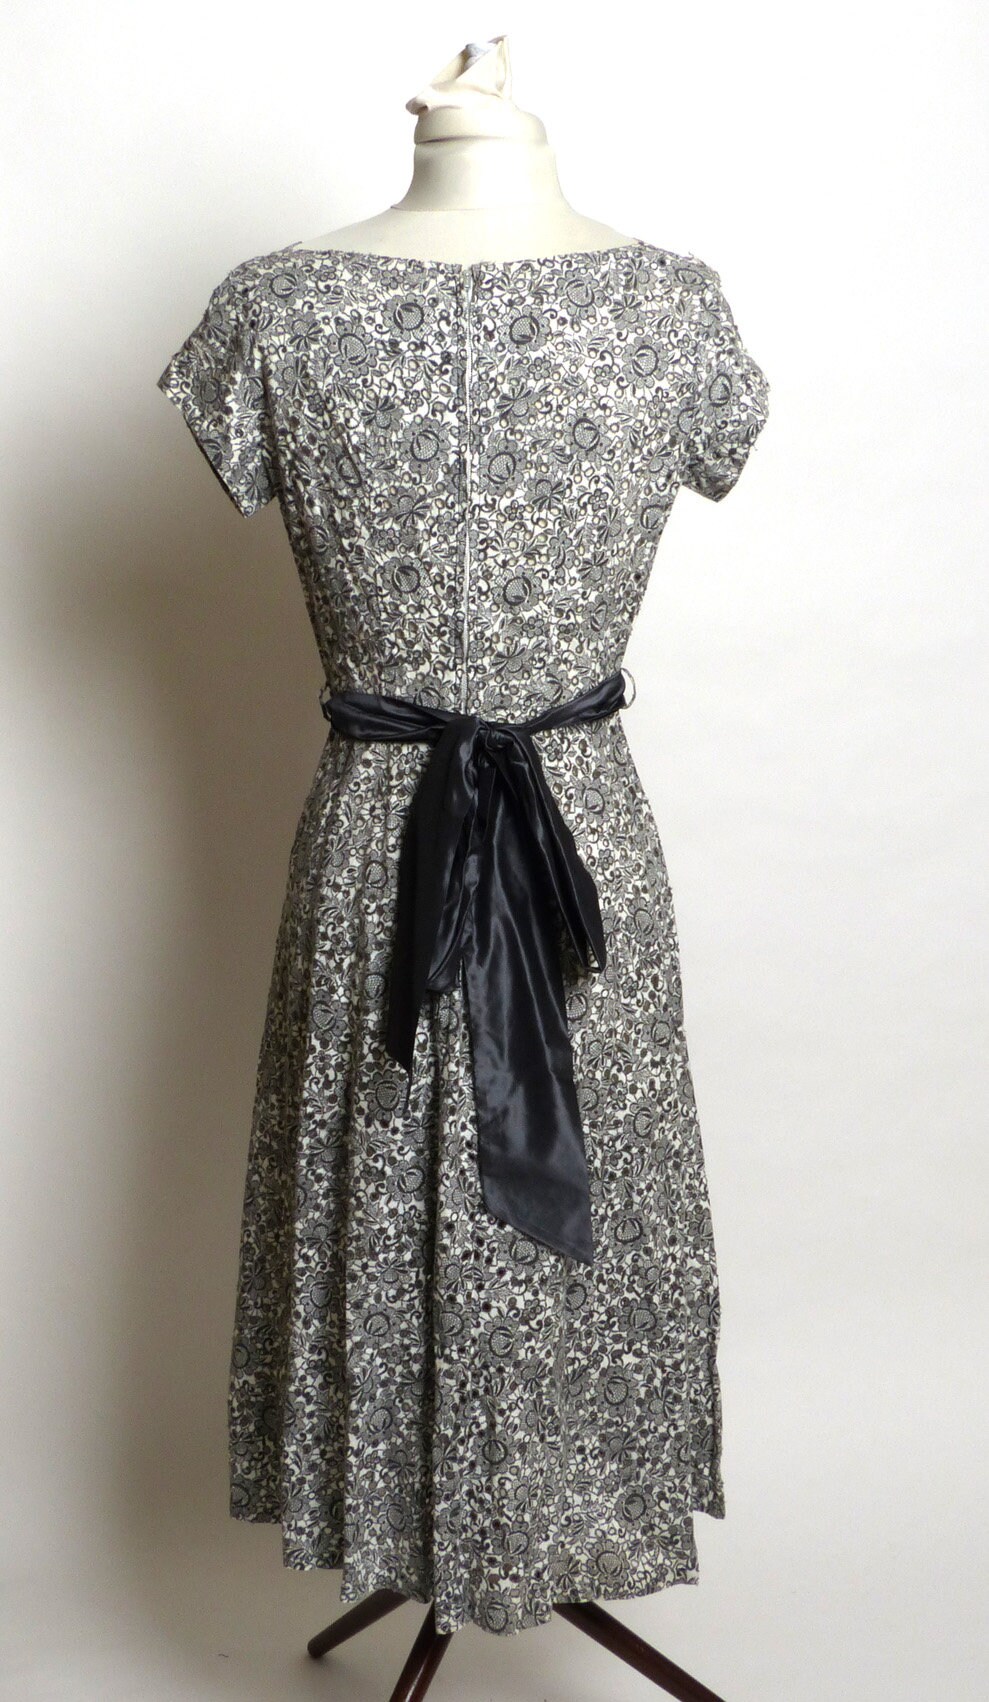 Circa 1950s Gray and White Cotton Eyelet Dress - Etsy